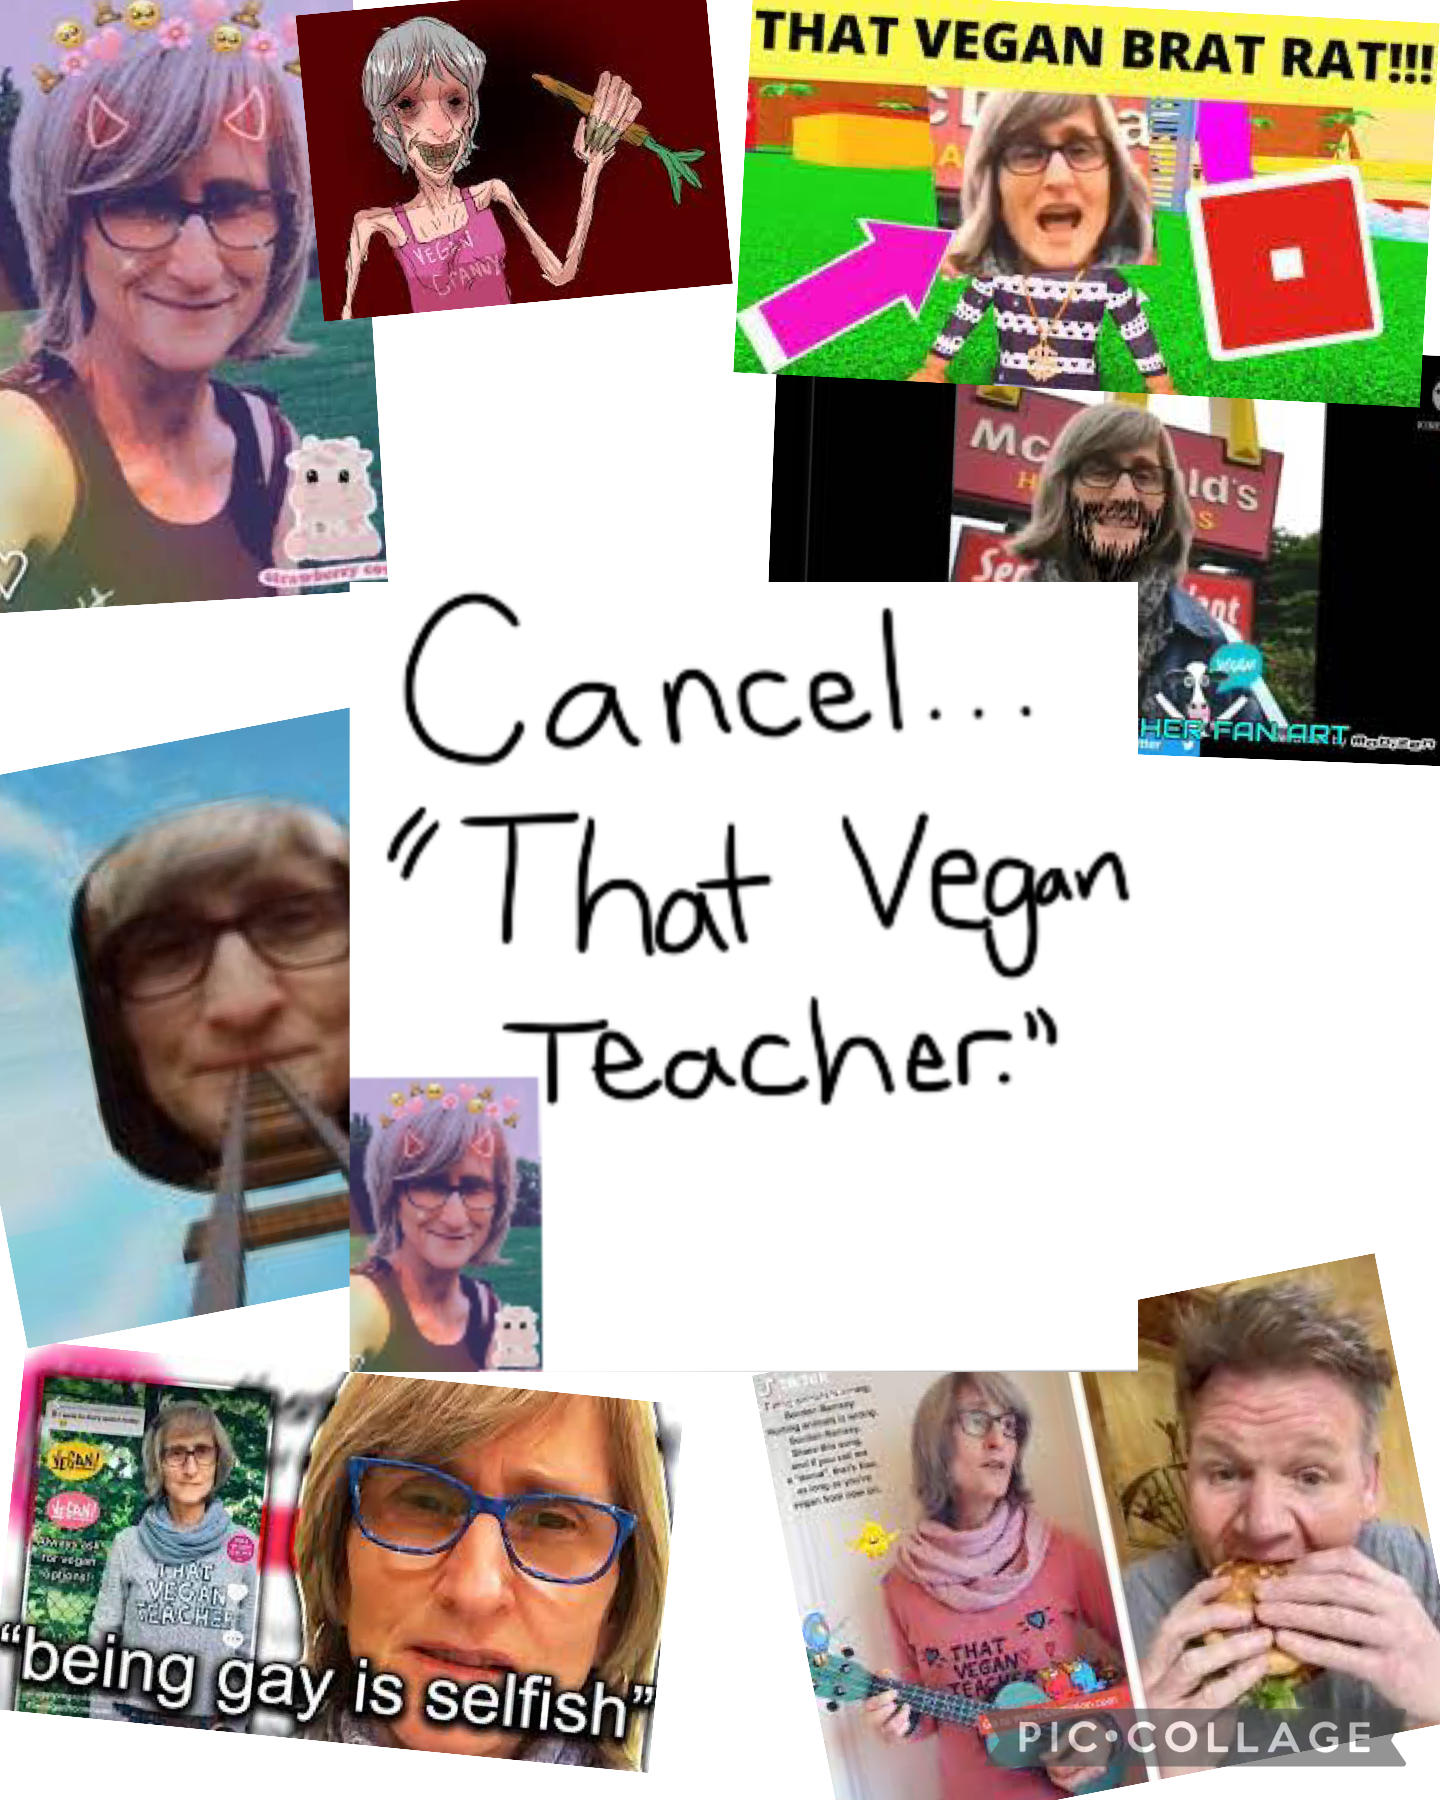 Cancel “ That vegan Teacher.”